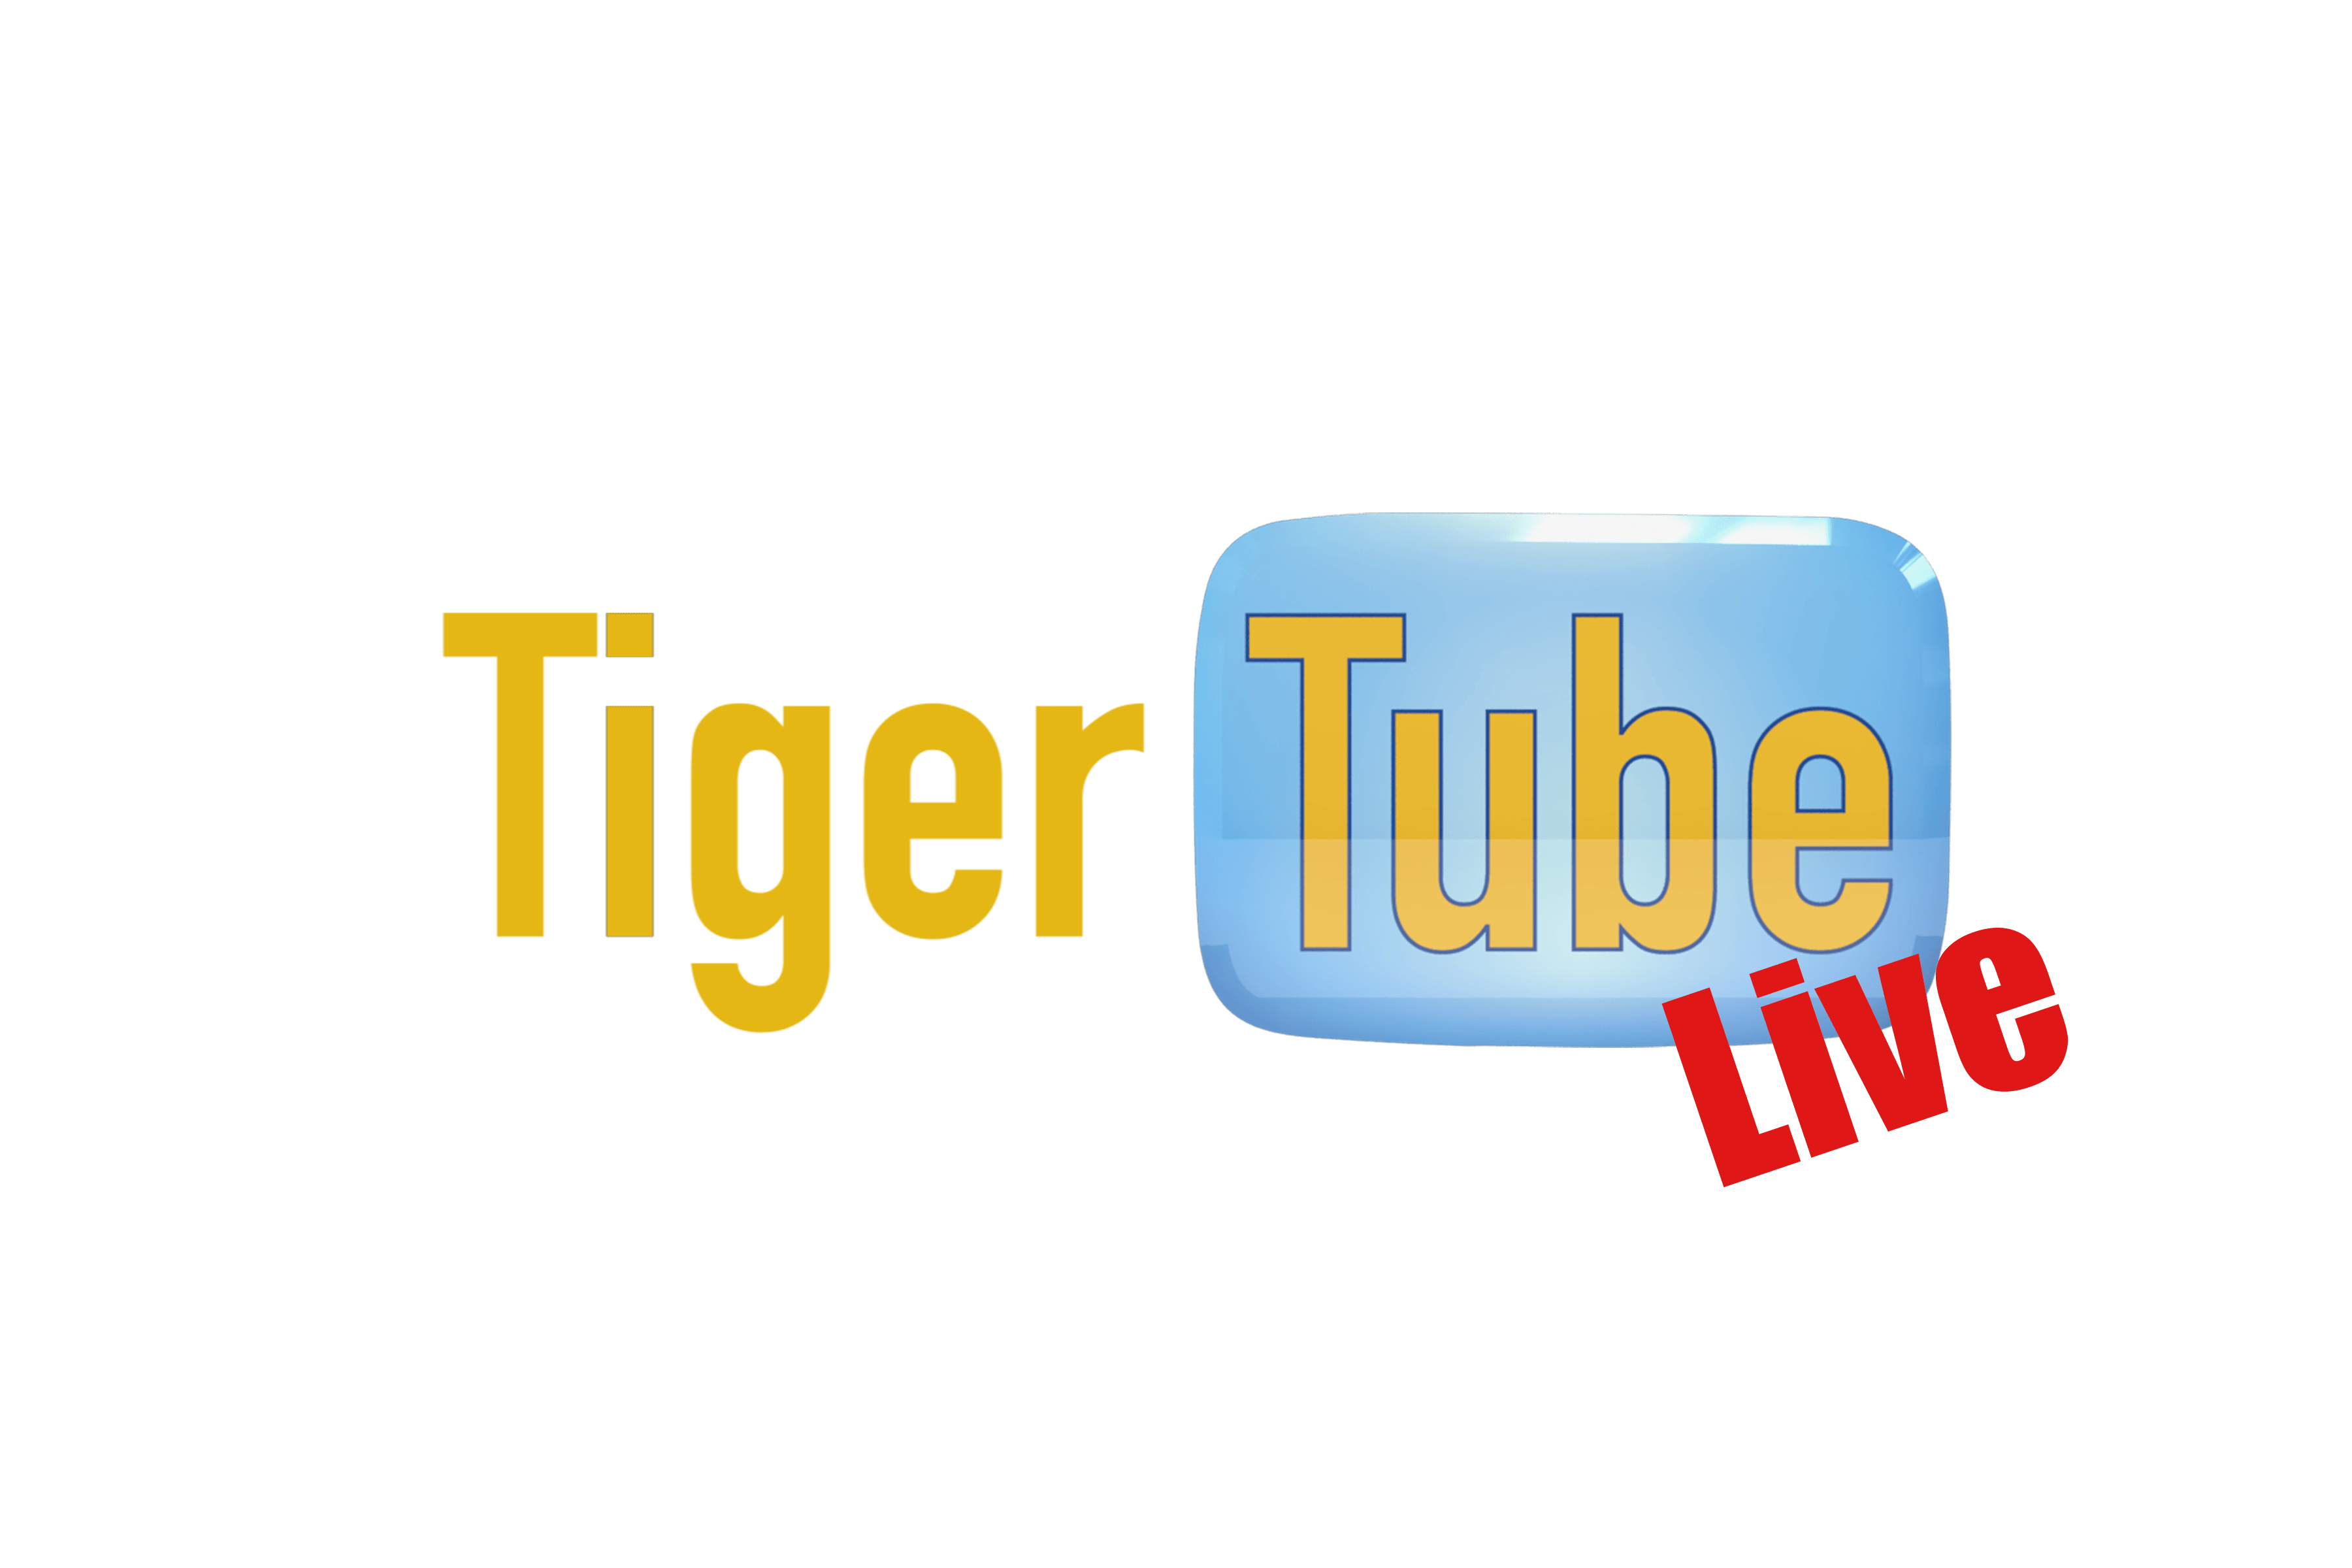 Tiger Tube Live